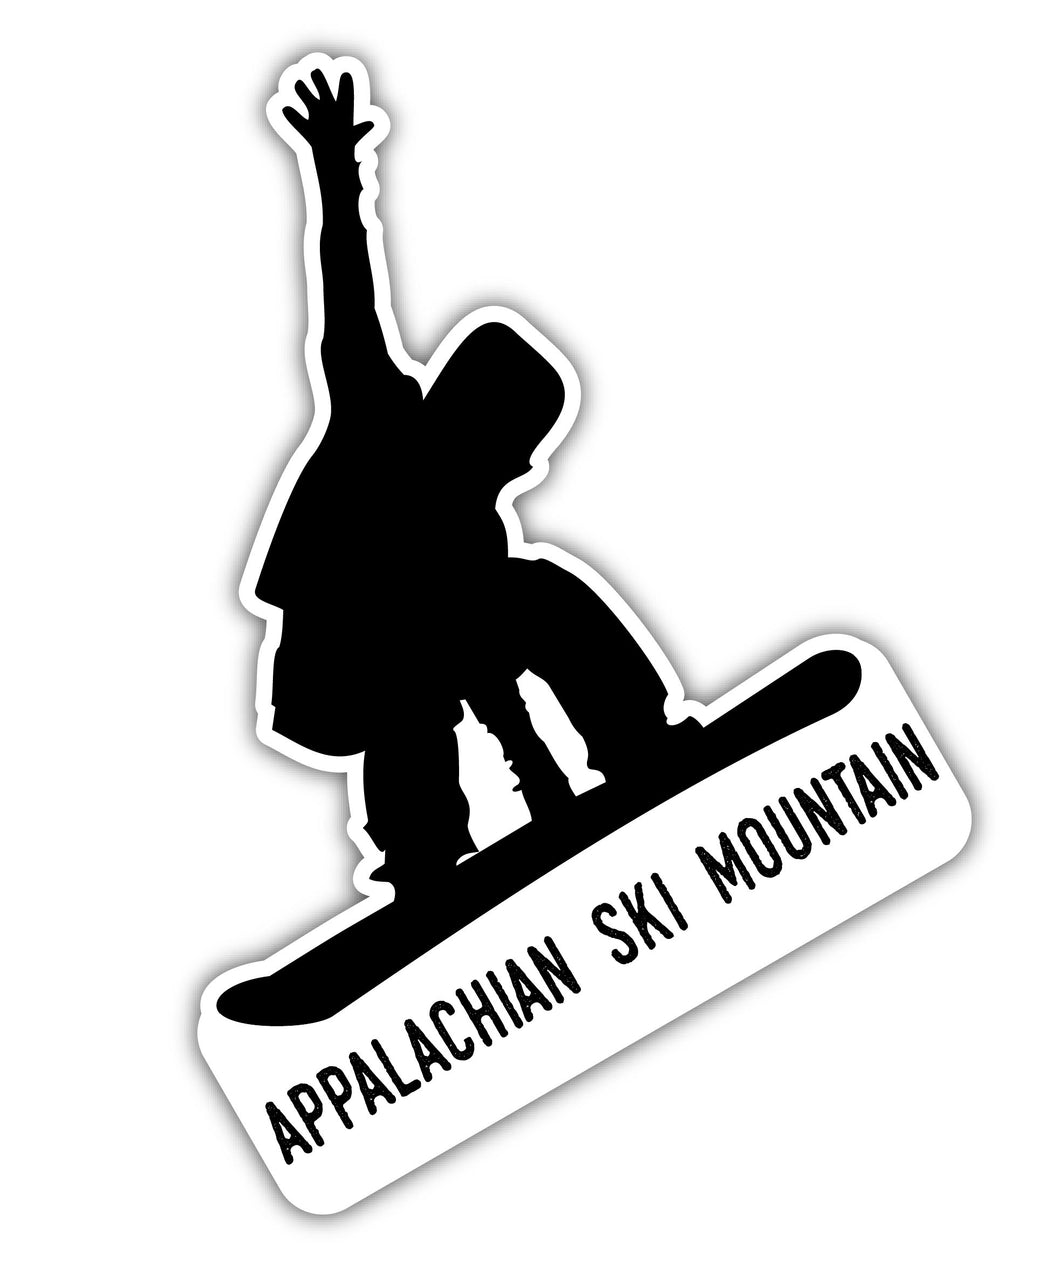 Appalachian Ski Mountain North Carolina Ski Adventures Souvenir 4 Inch Vinyl Decal Sticker Board Design